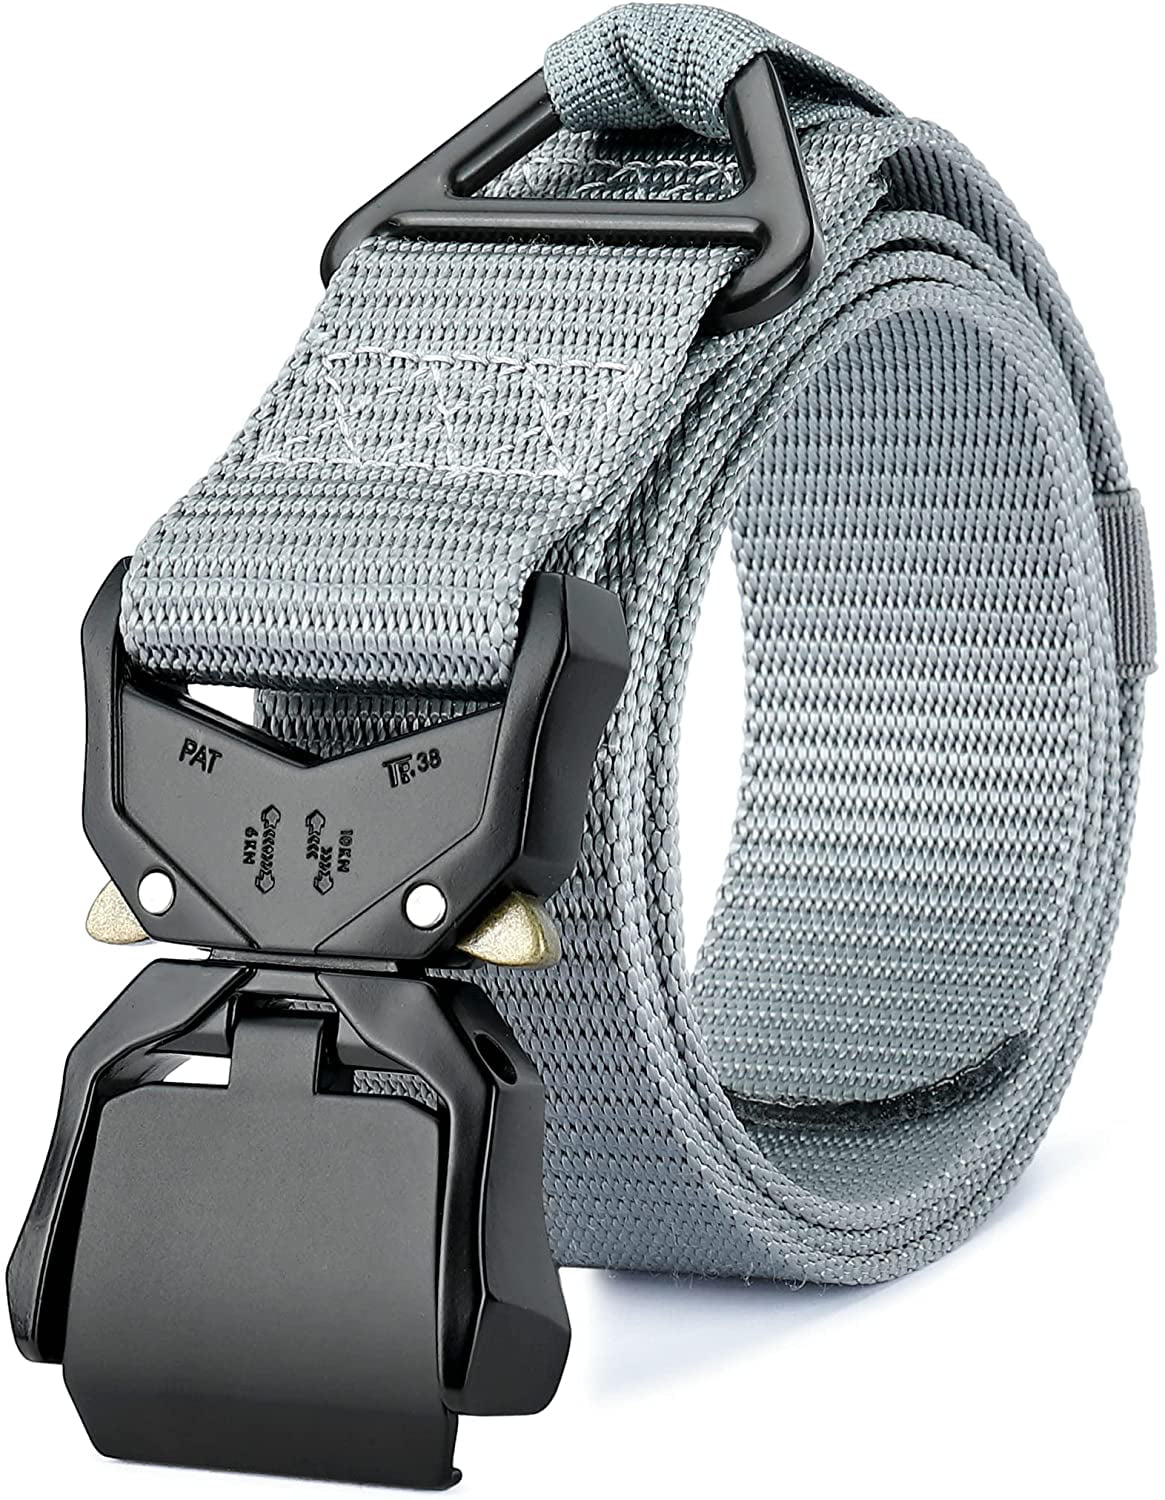 46-50" Quick lock belt Brand New Leather Dress Belt Men's Belt Auto Lock belt 